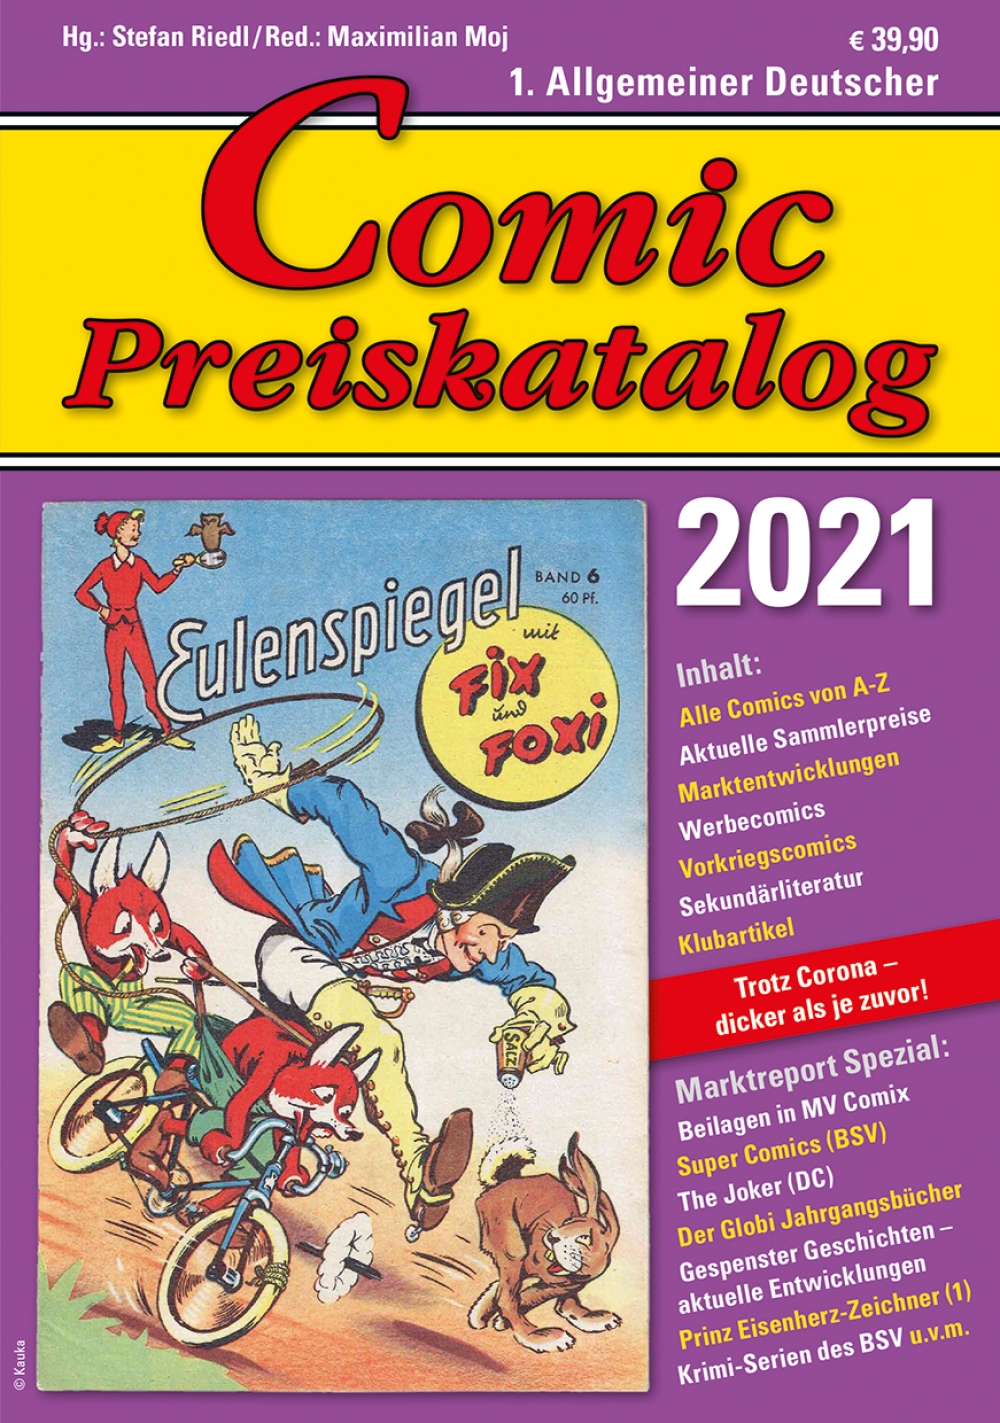 Titelbild: Comic-Preiskatalog 2021 (Hardcover)